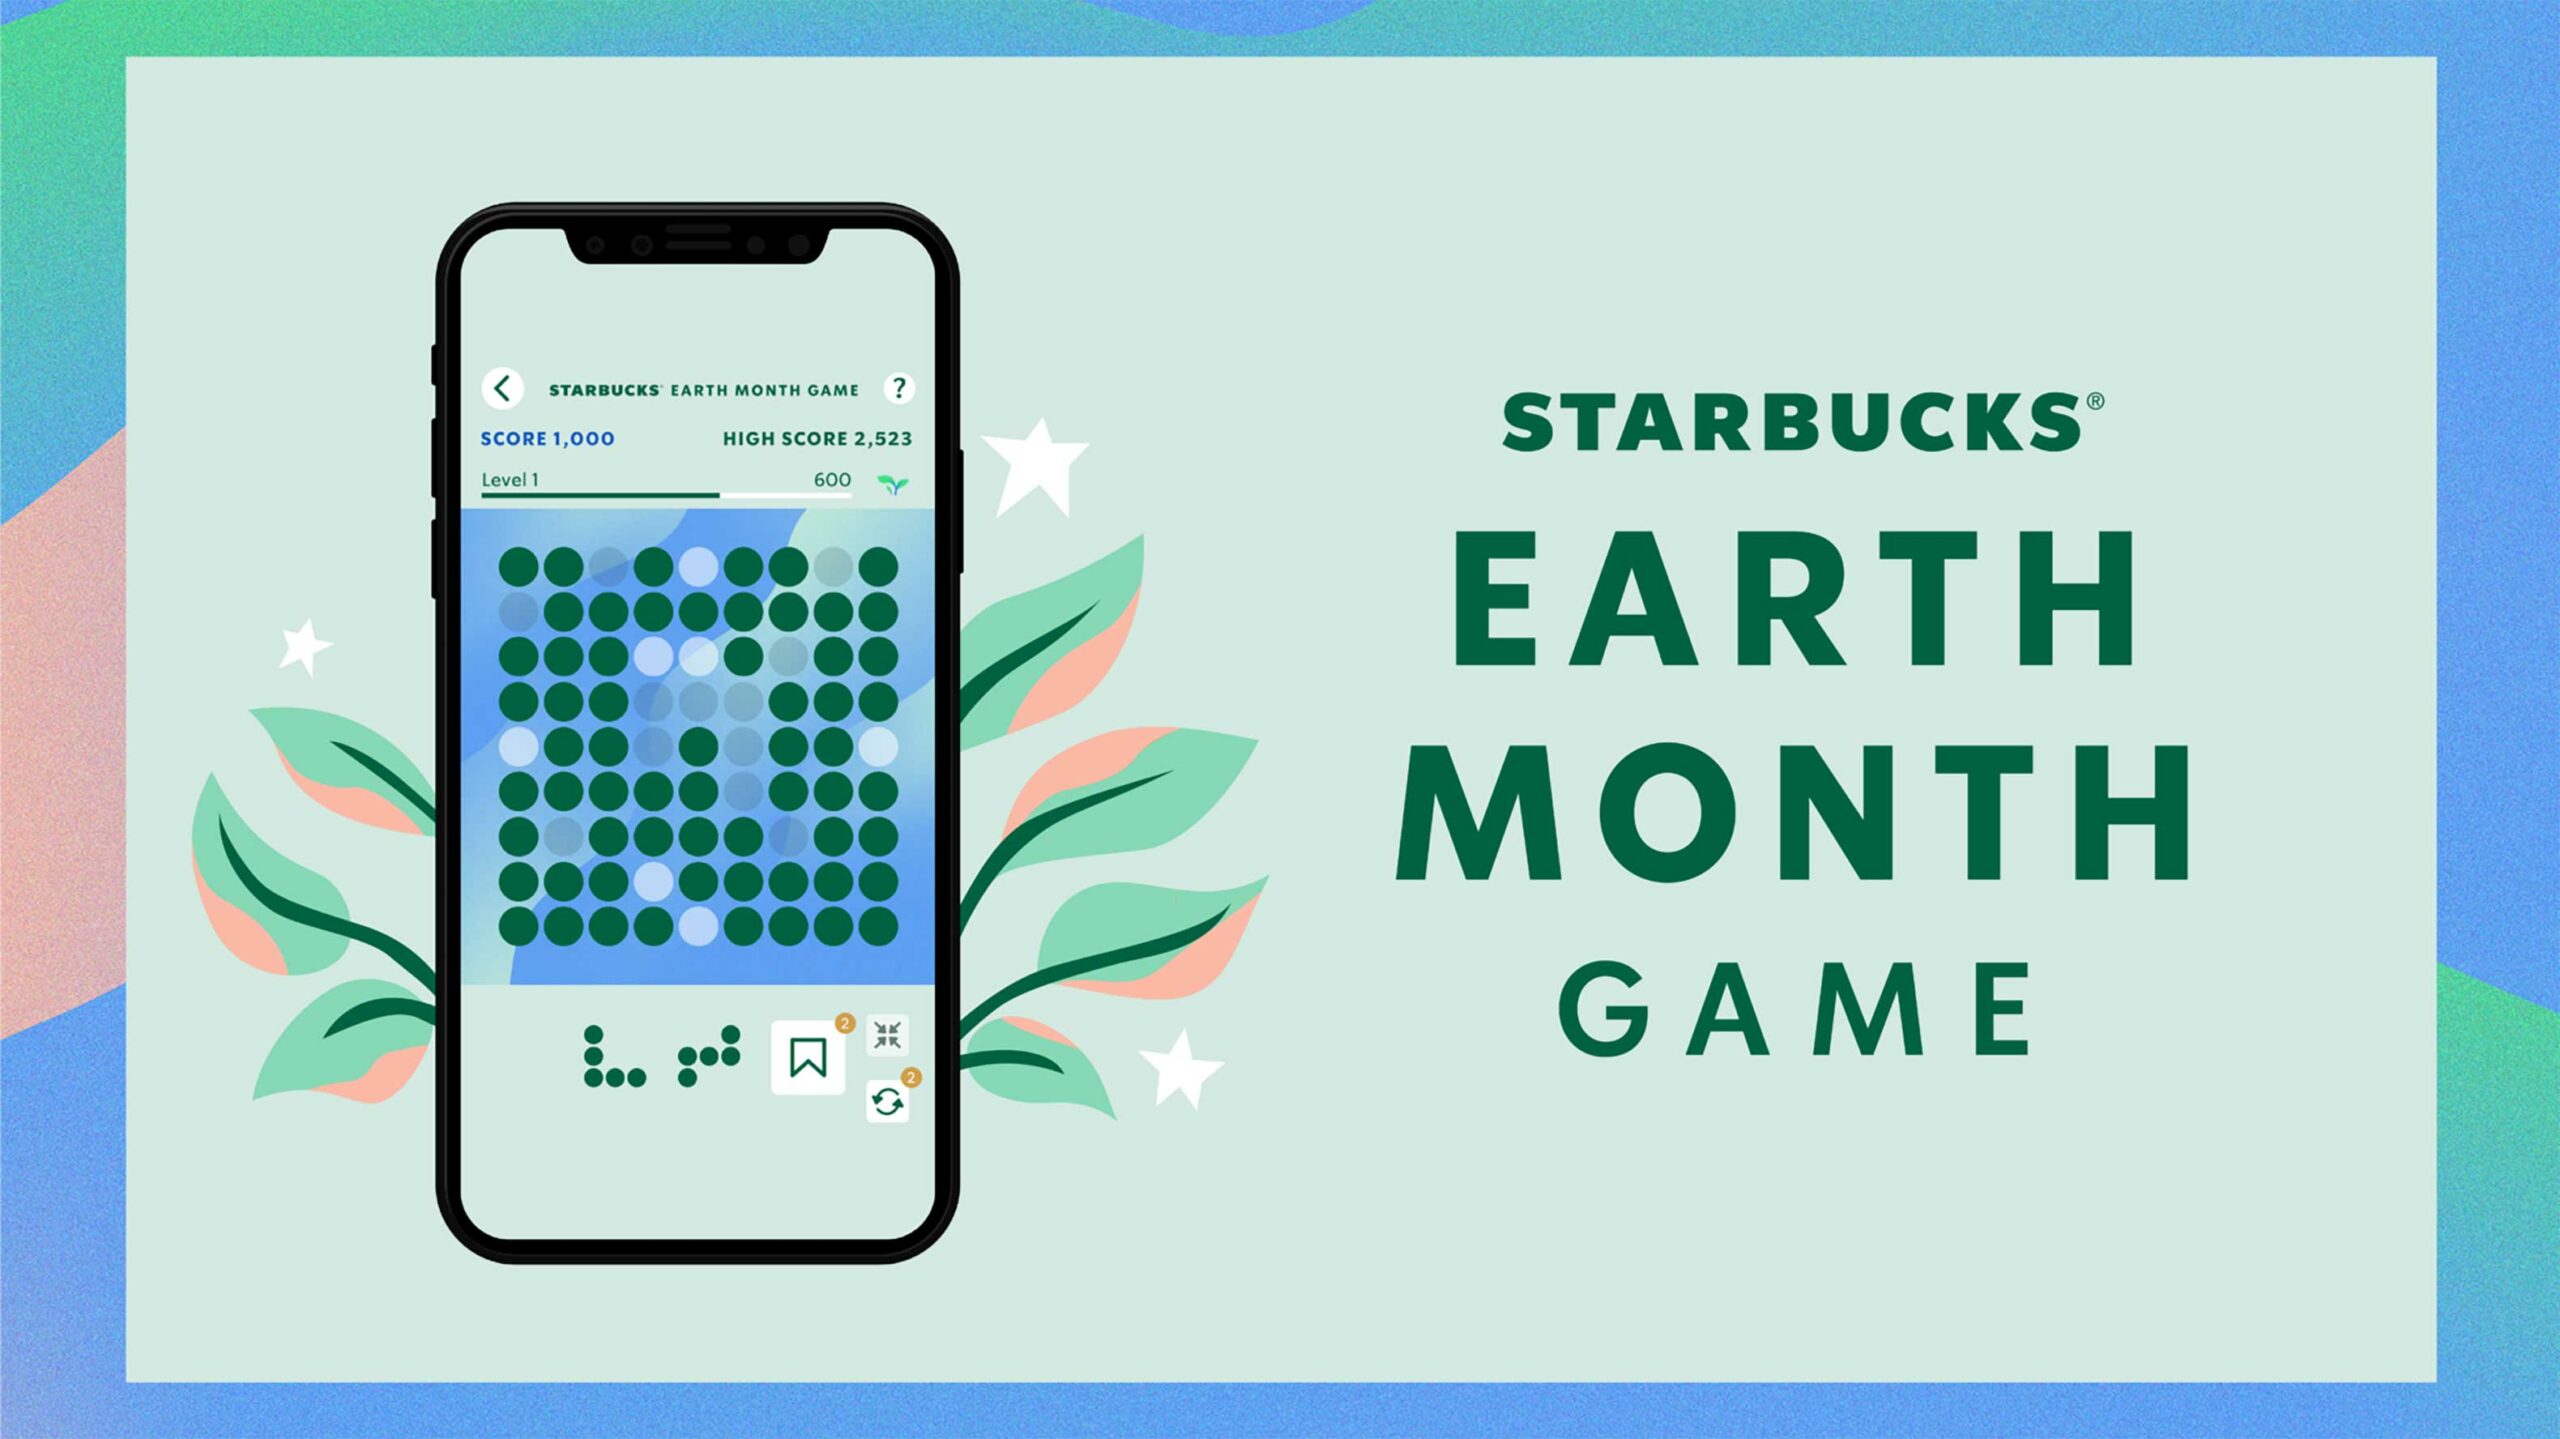 Starbucks mobile game